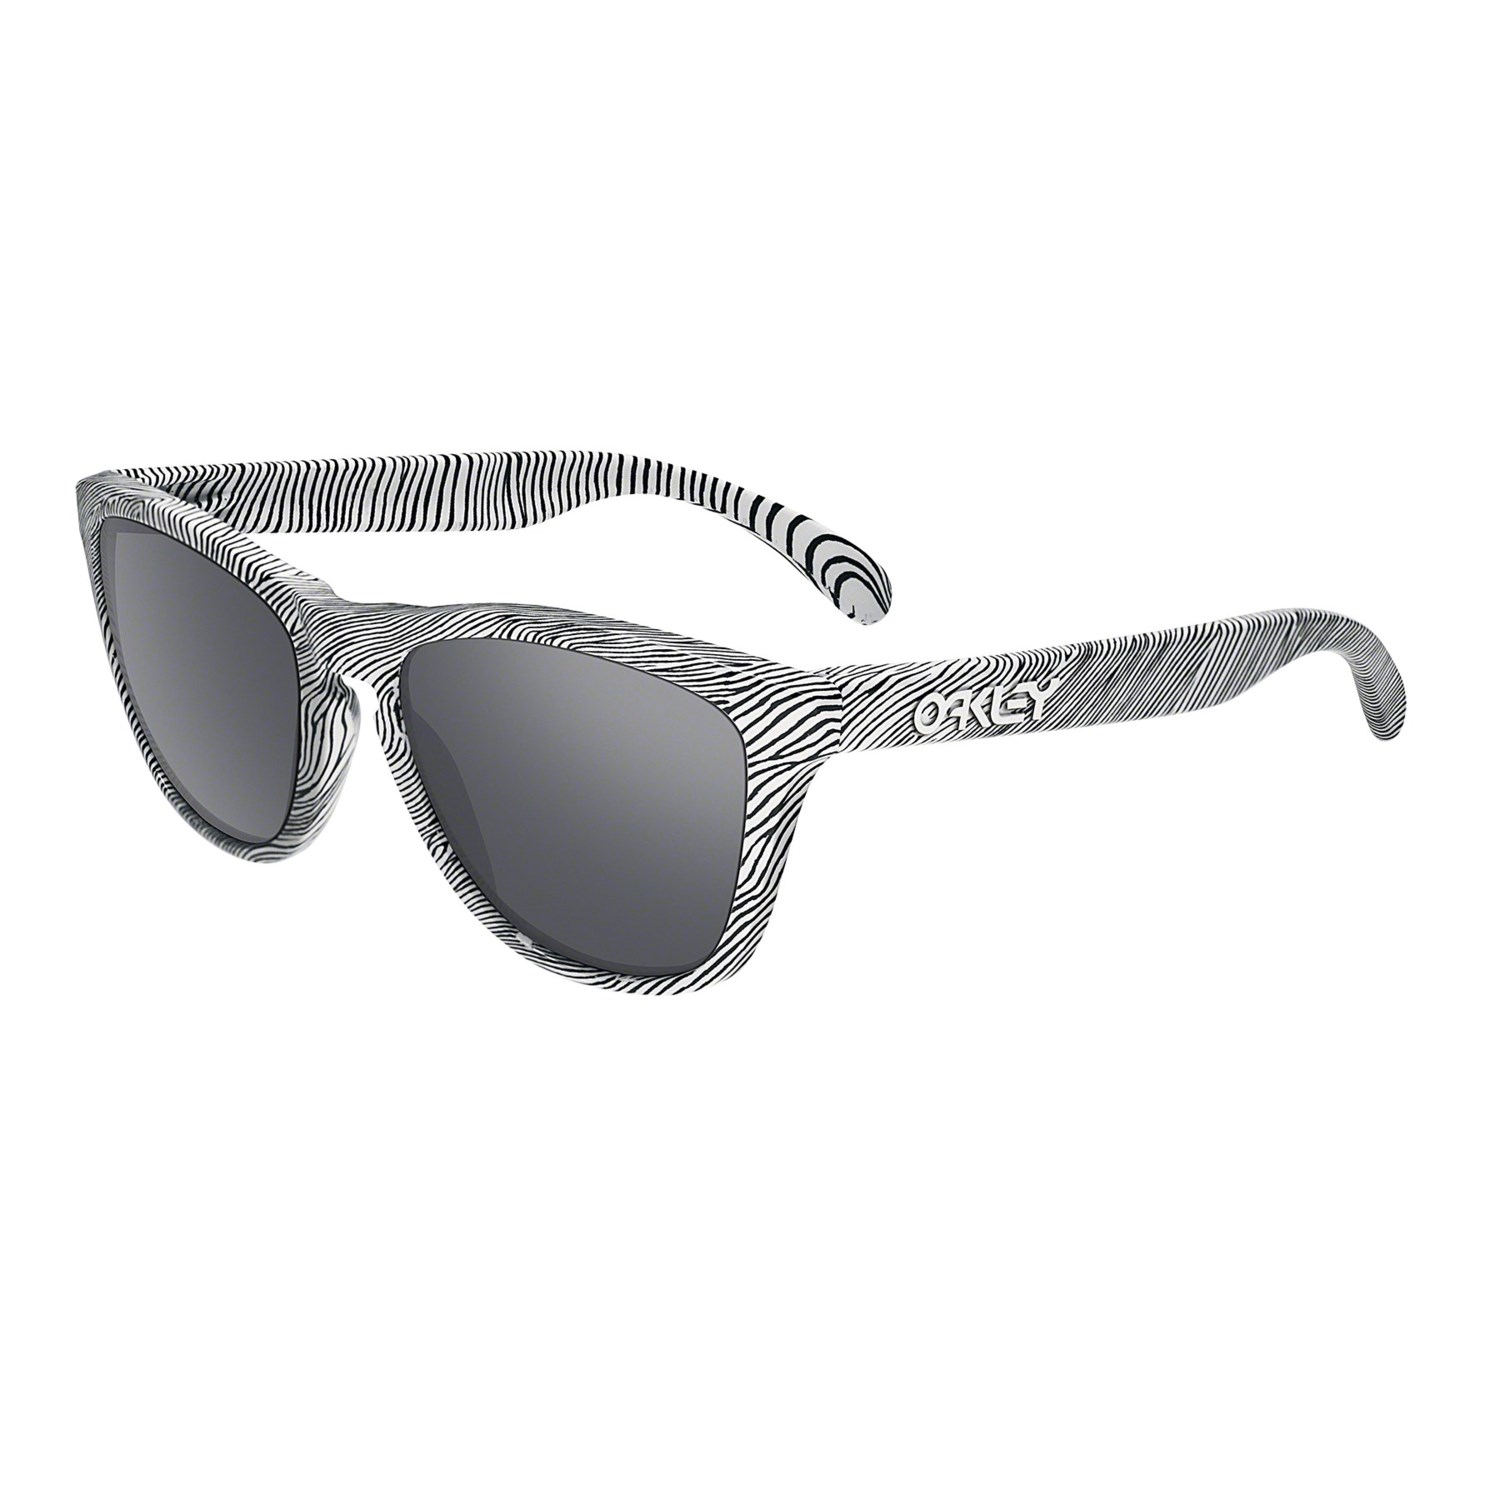 Oakley Frogskins Collection Sunglasses - Iridium® Lenses - Save 62%